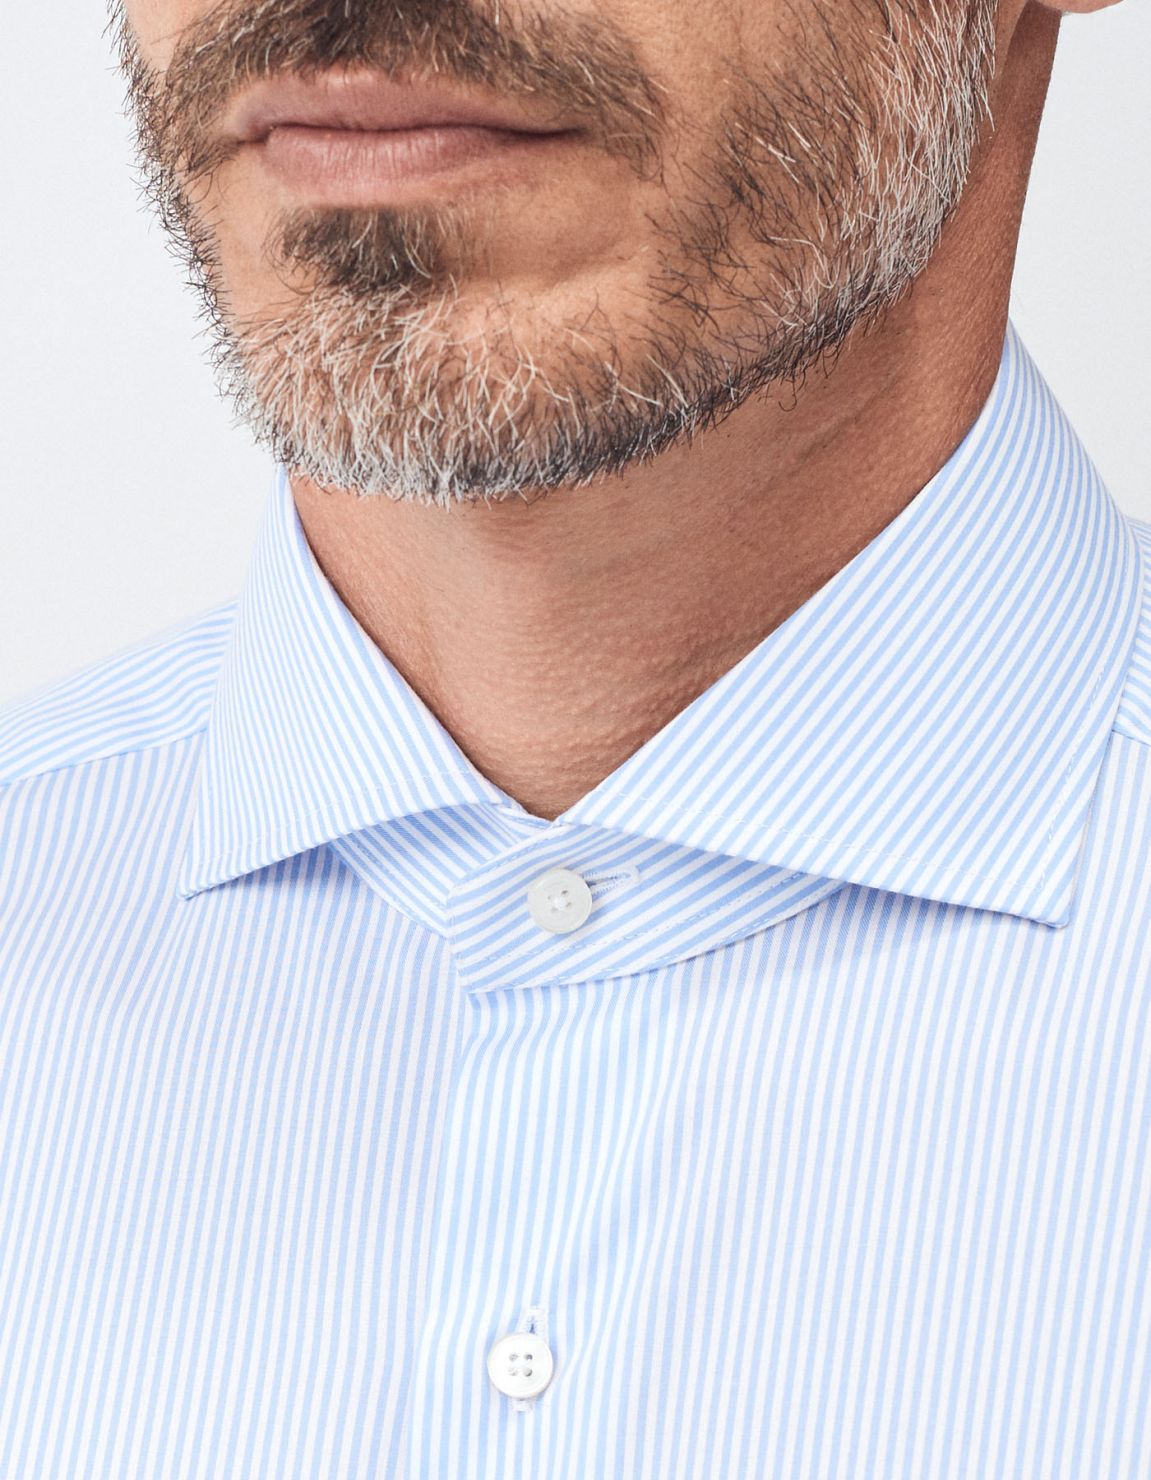 Shirt Collar cutaway Light Blue Twill Tailor Custom Fit 3